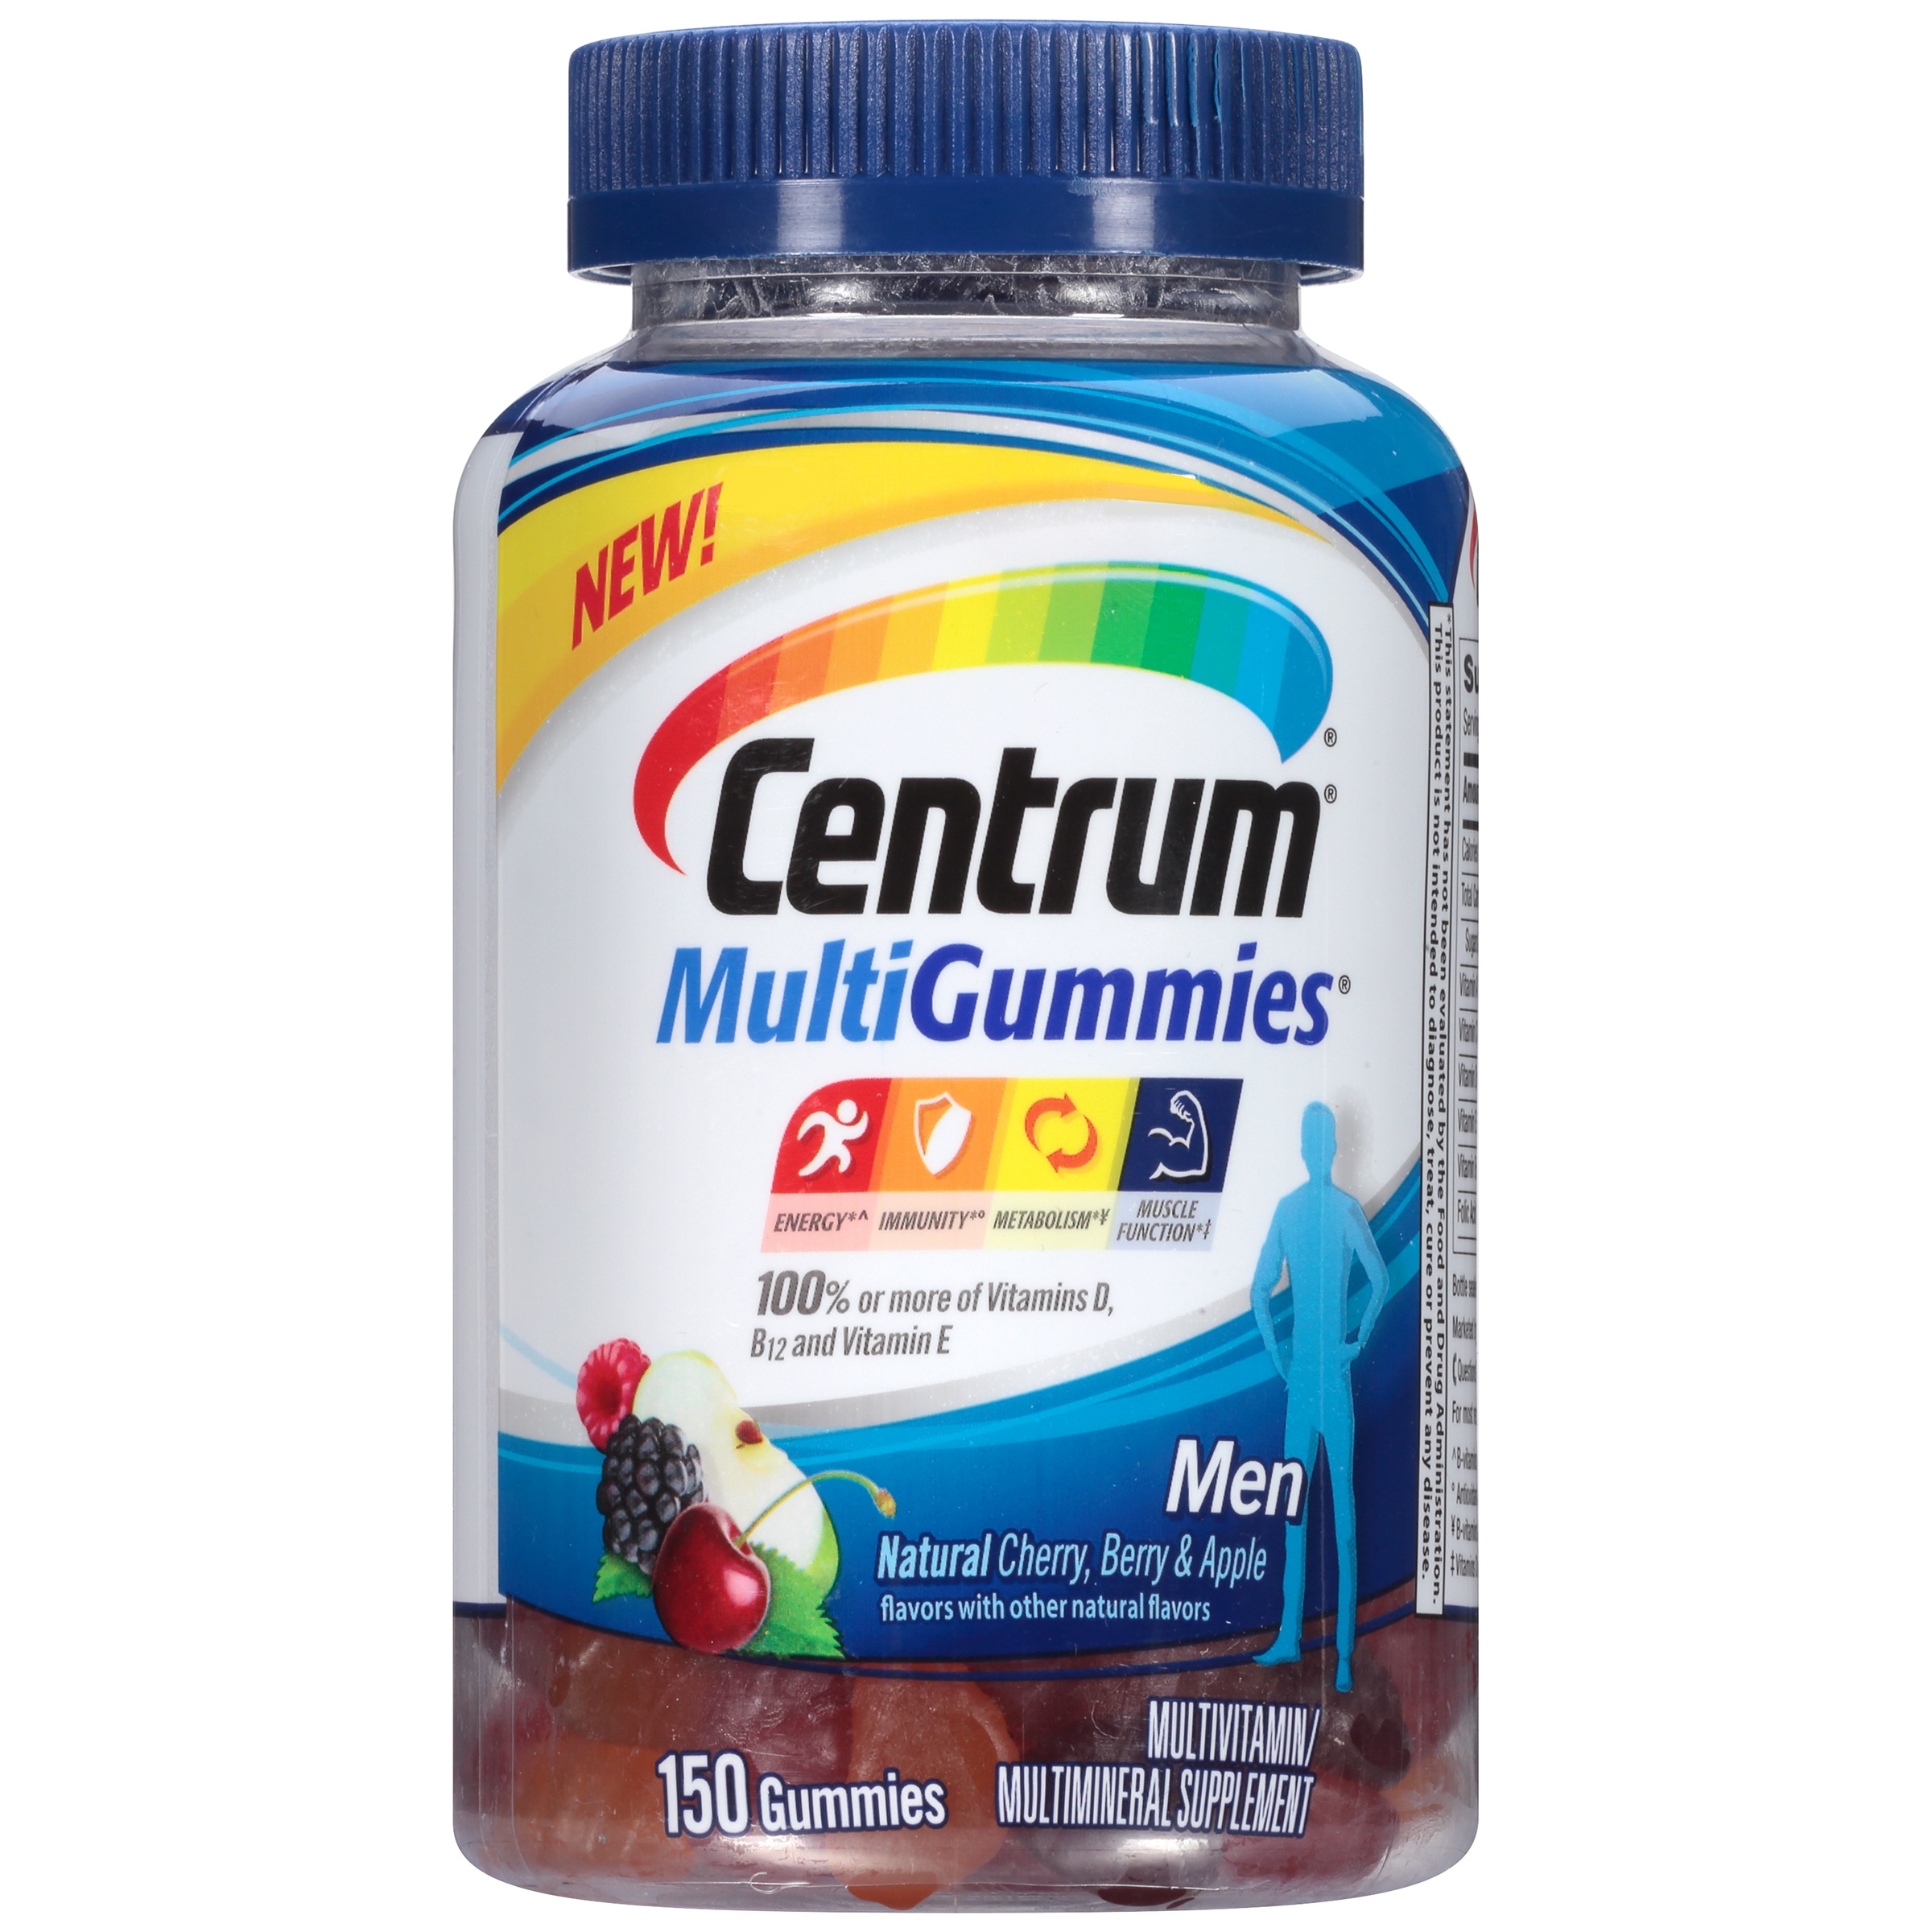 Centrum MultiGummies Men (150 Count, Natural Cherry, Berry, & Apple Flavor) Multivitamin / Multimineral Supplement Gummies, Vitamin D3 - image 1 of 8